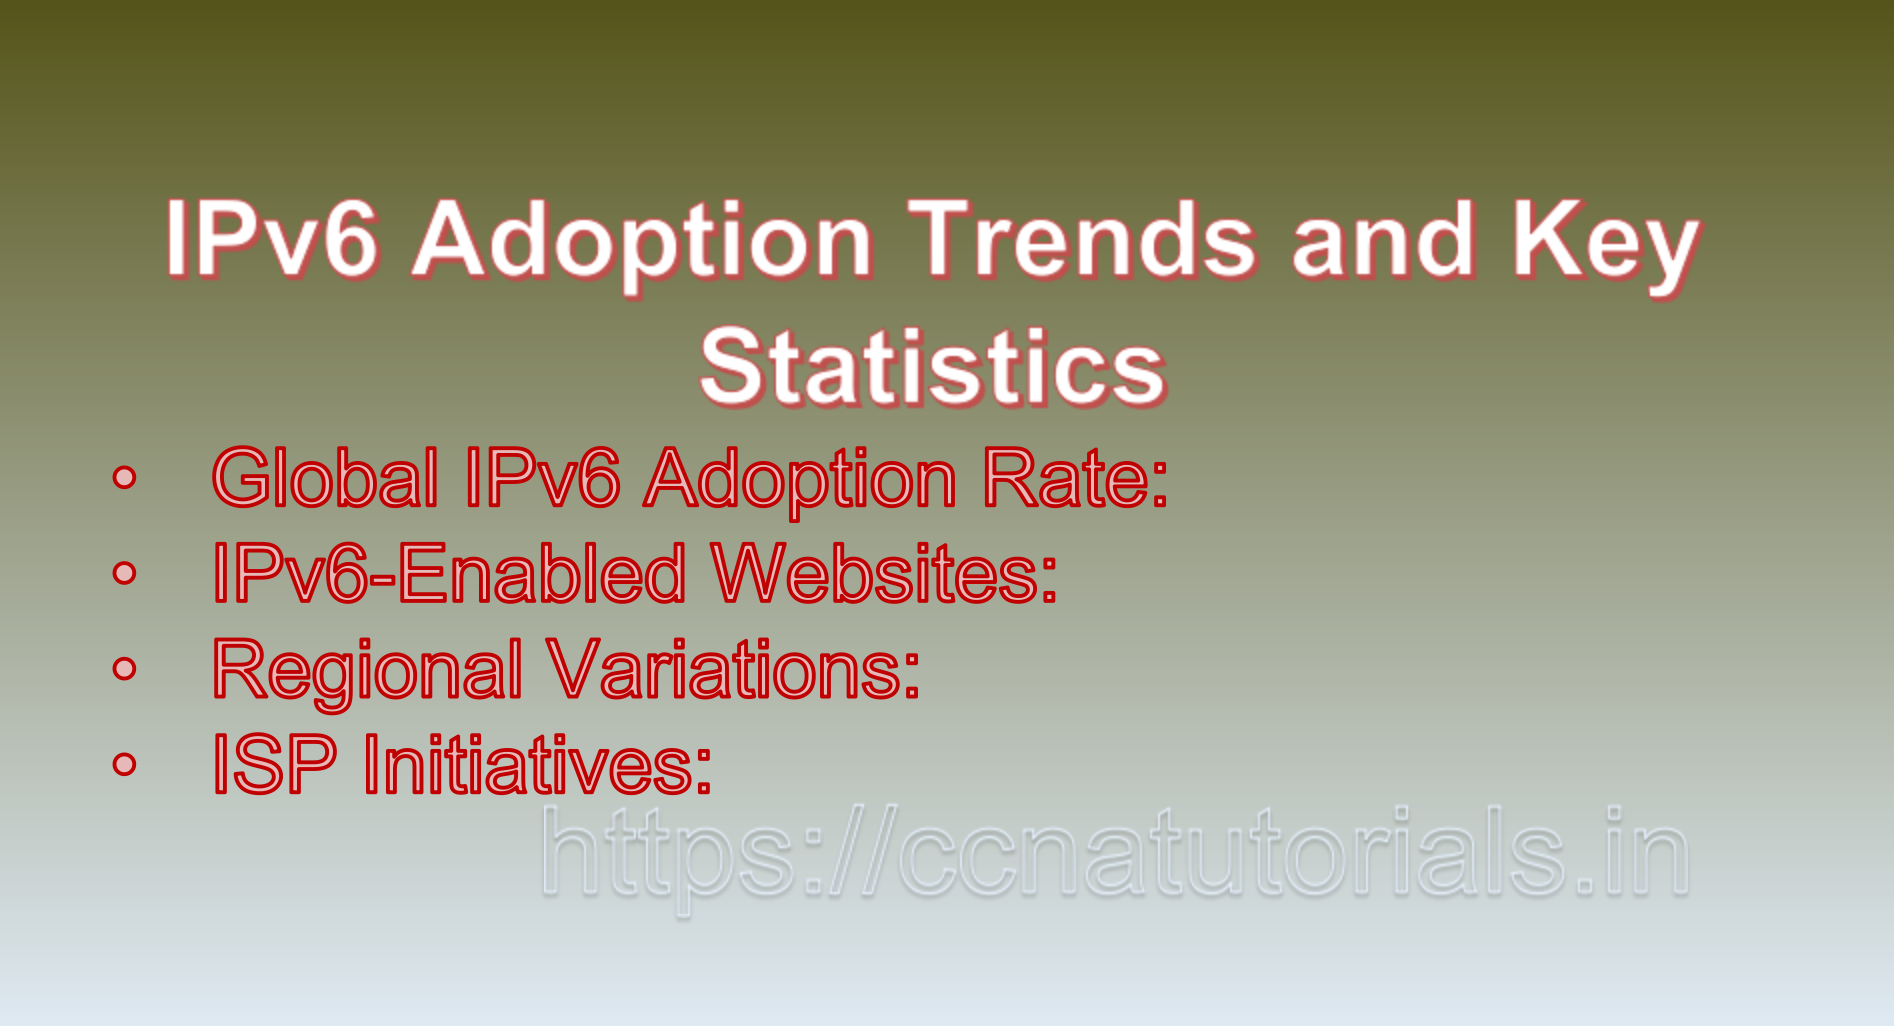 IPv6 Adoption and Statistics, ccna, CCNA TUTORIALS